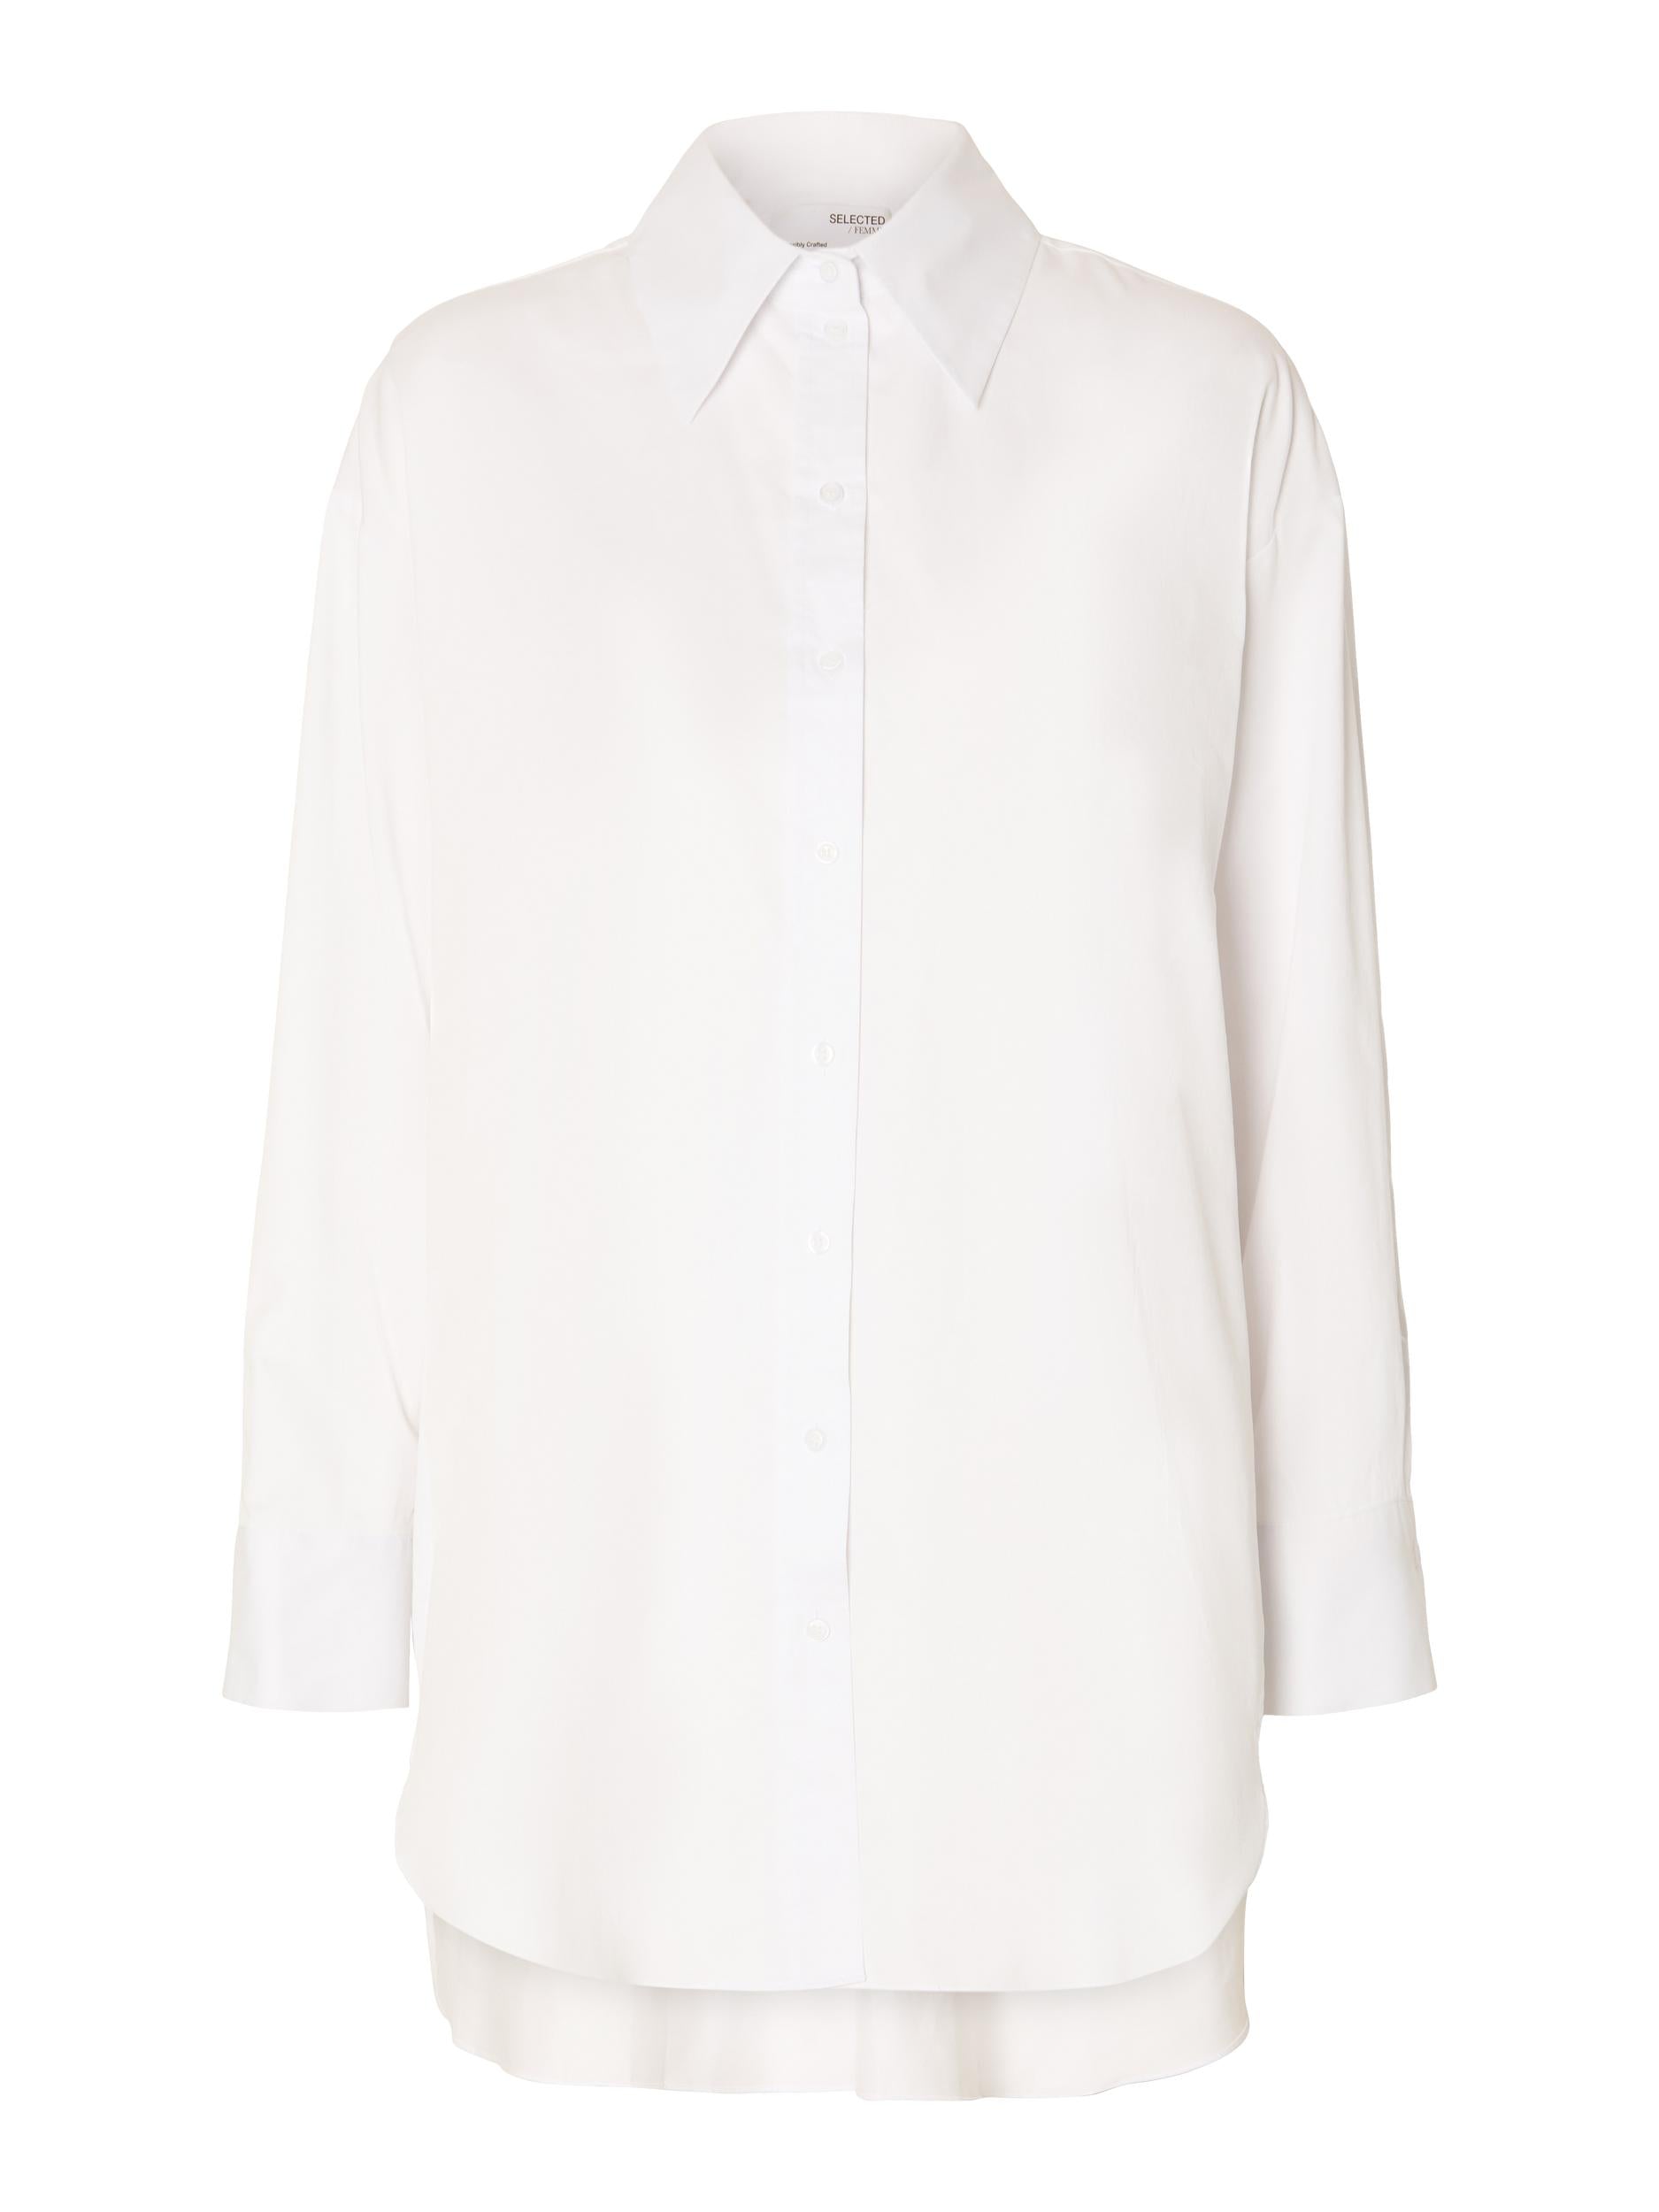 Selected "Iconic" Shirt white